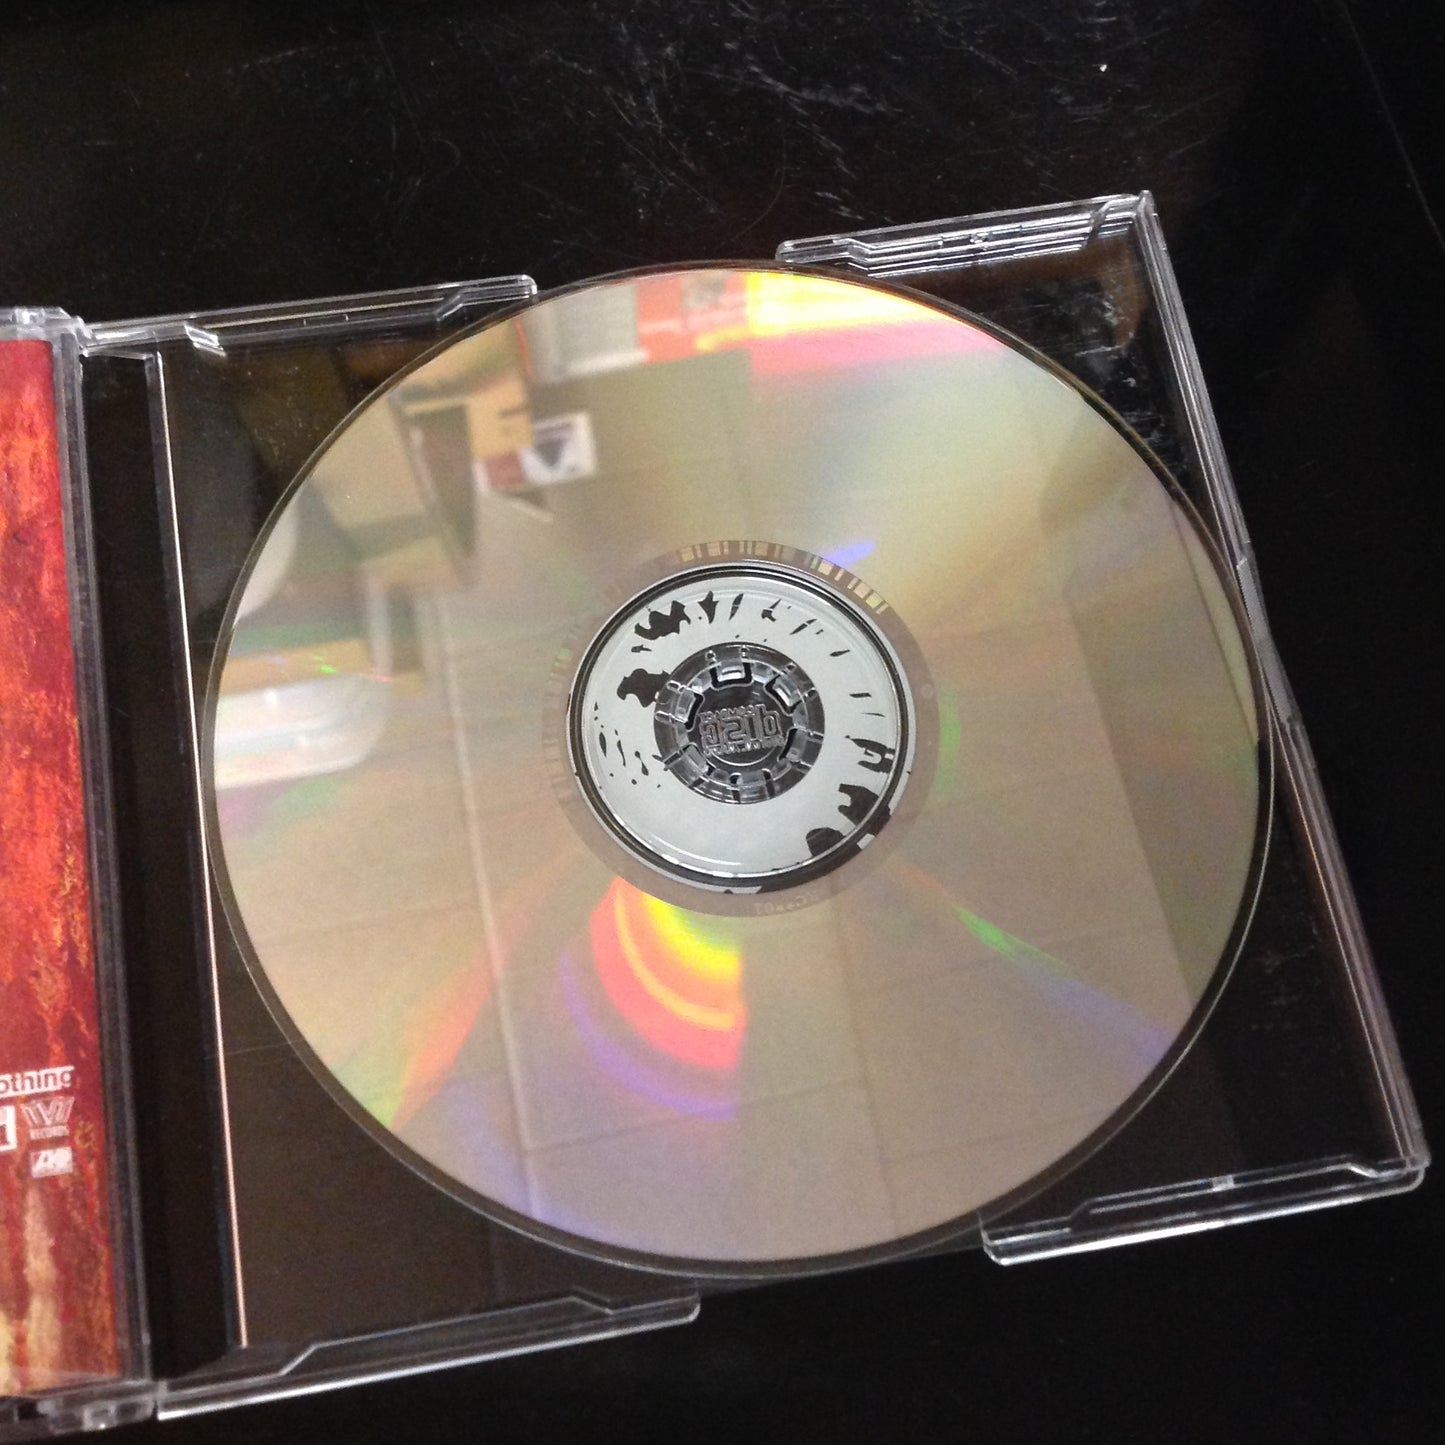 CD NIN Nine Inch Nails: The Downward Spiral 7 92346-2 halo eight